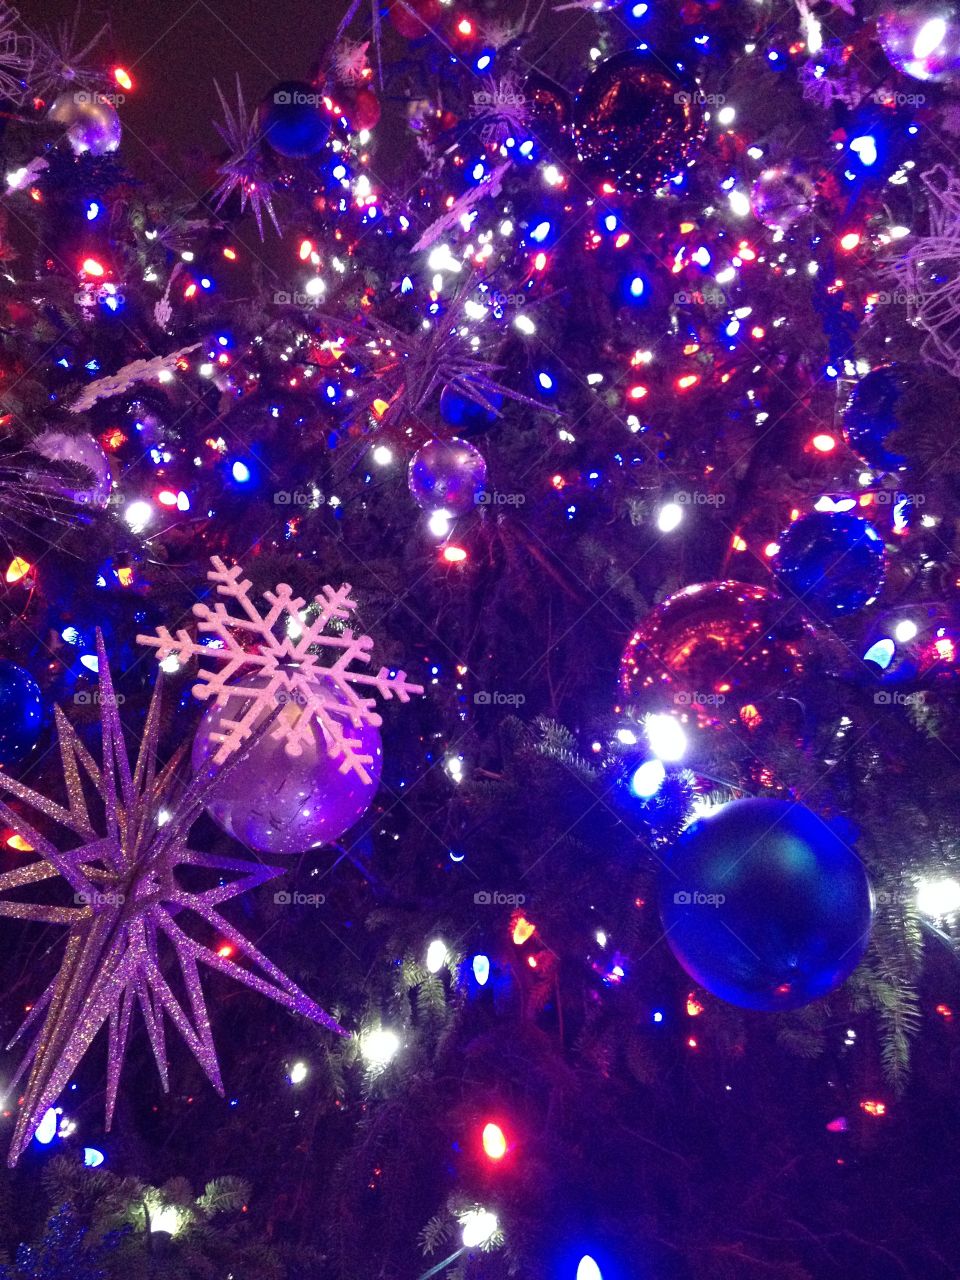 Sparkle of Celebration at Christmas